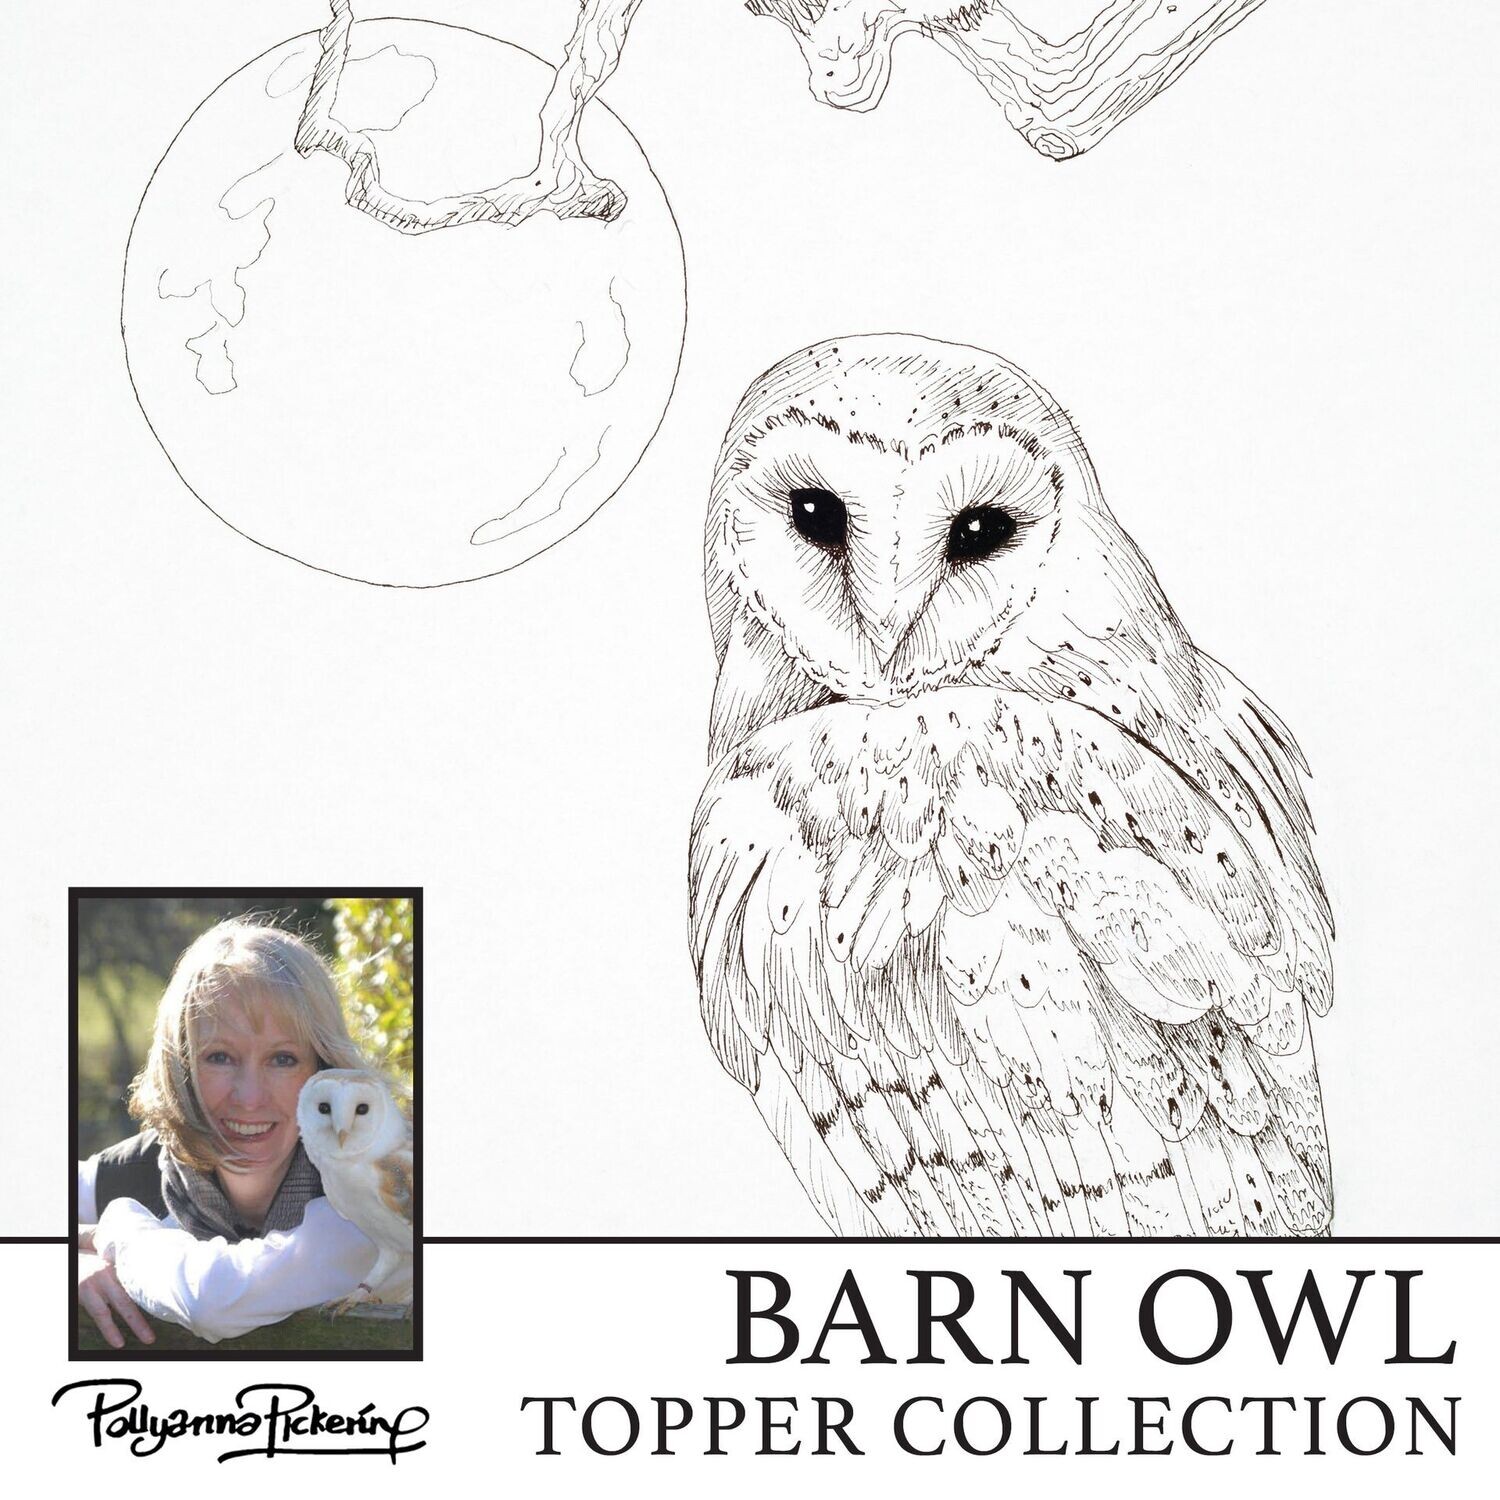 Pollyanna Pickering's Barn Owl Topper Digital Collection